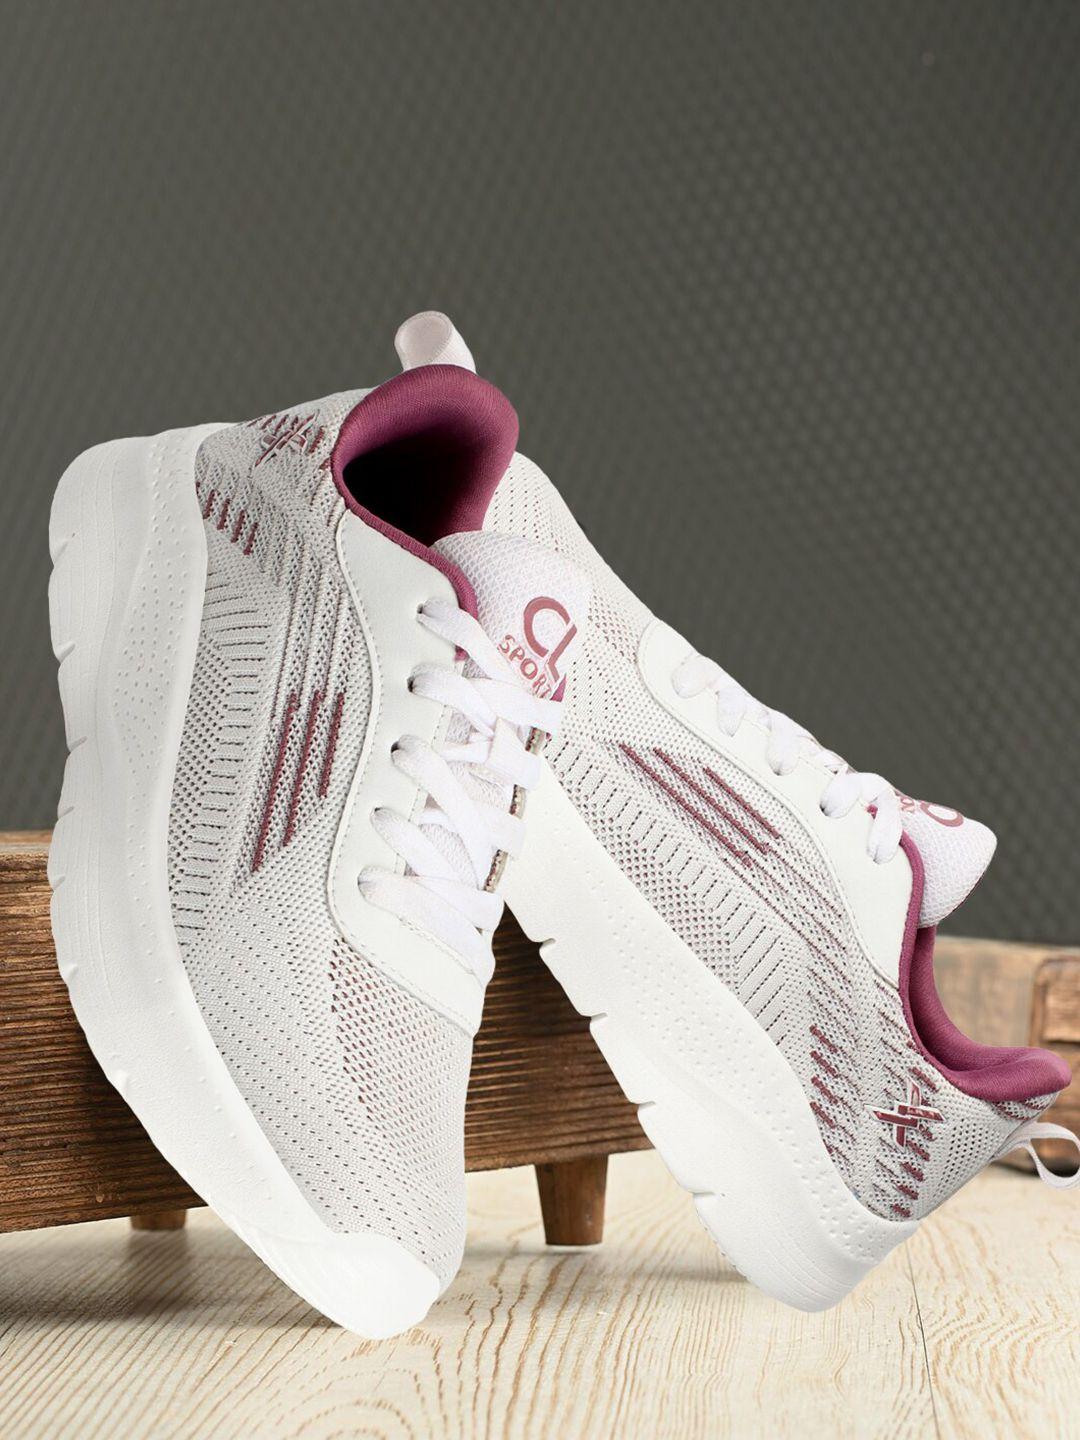 carlton-london-sports-women-flyknit-mesh-jogging-shoes